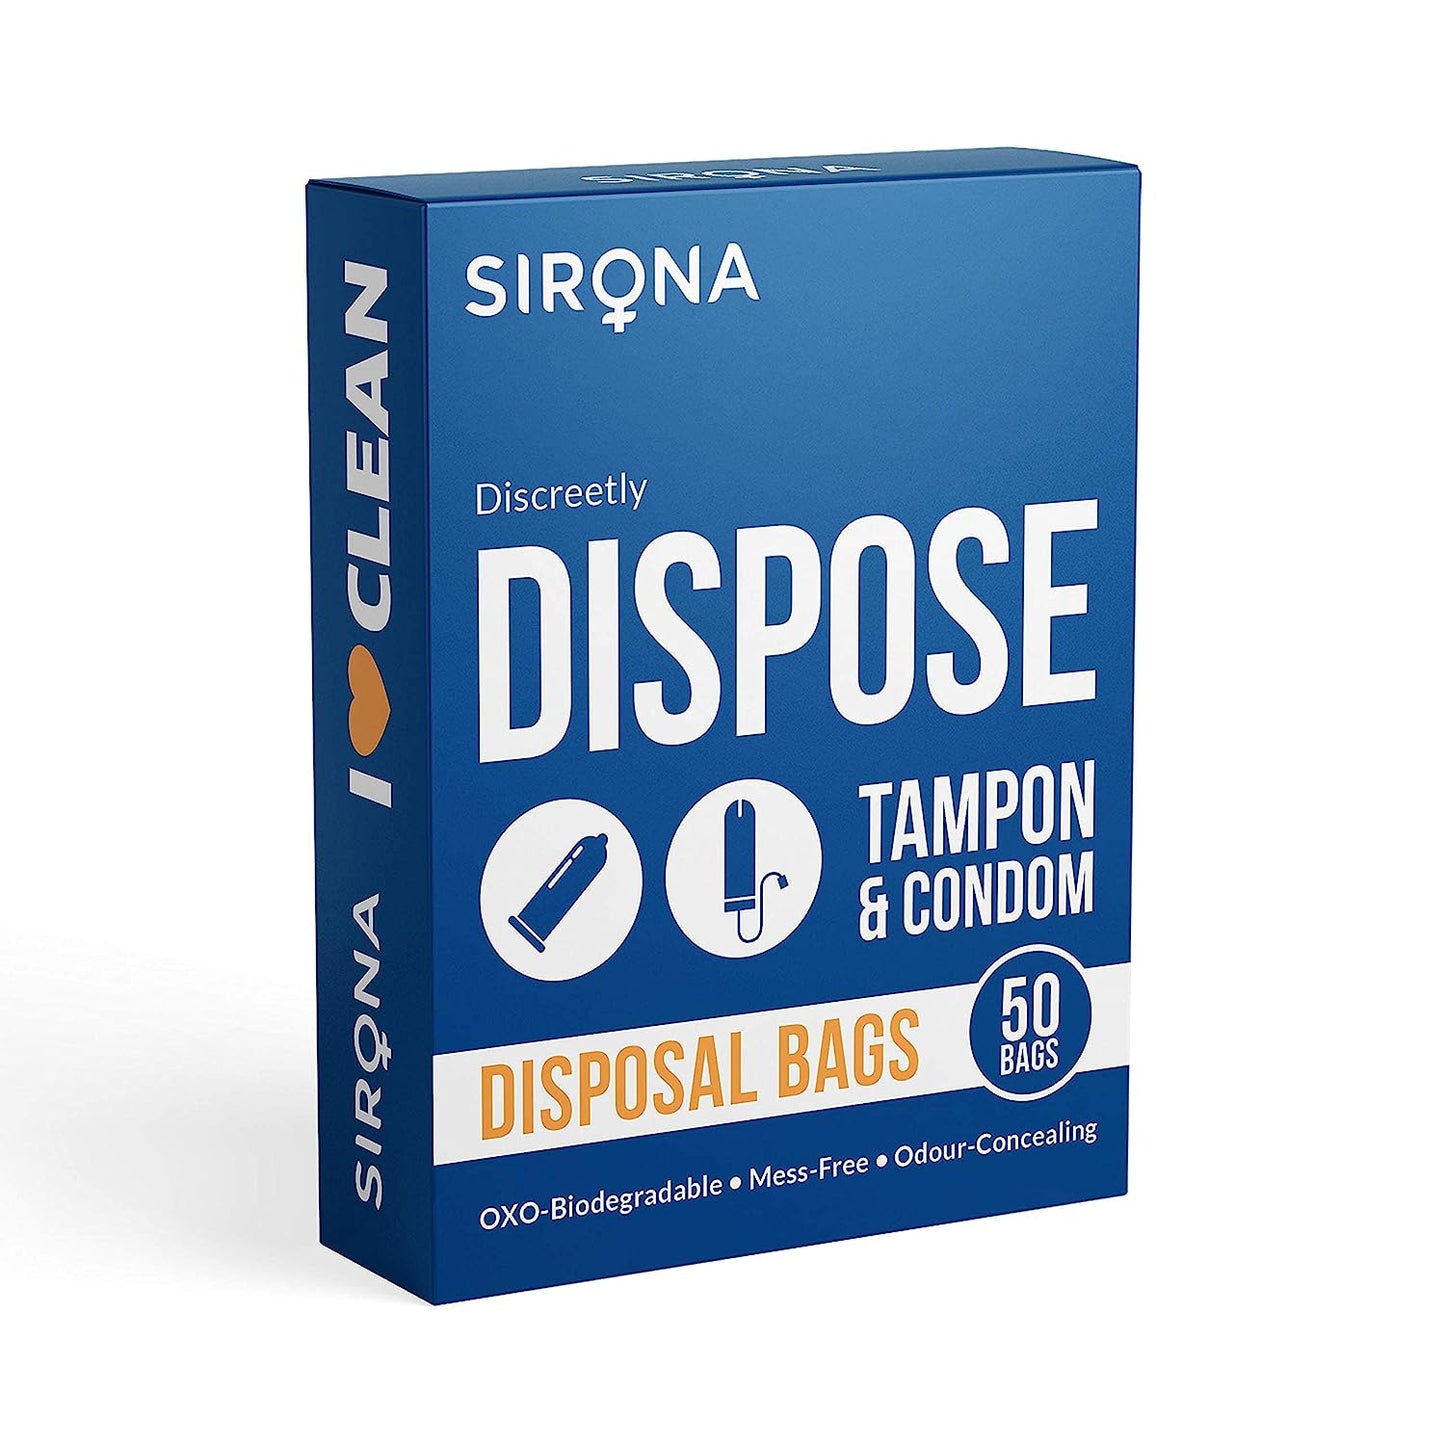 Sirona Discreet Tampons and Condoms Disposal Bags - 50 Bags